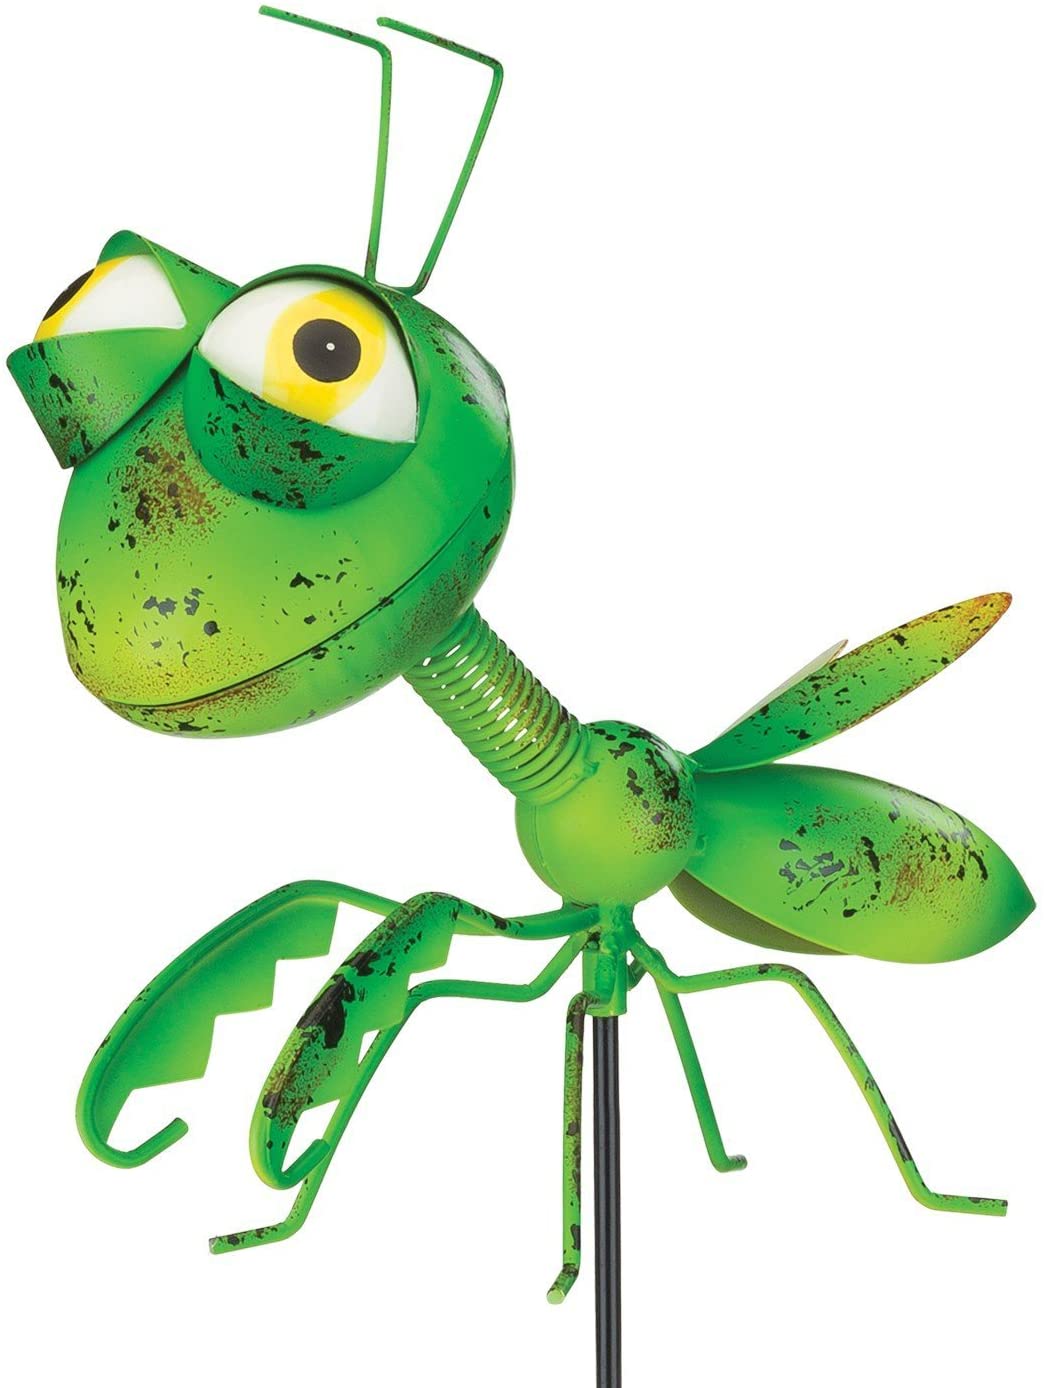 Buggy Garden Stake in Dragonfly Bee Locust Grasshopper Praying Mantis Ladybug Ant Ornamental Garden Stakes